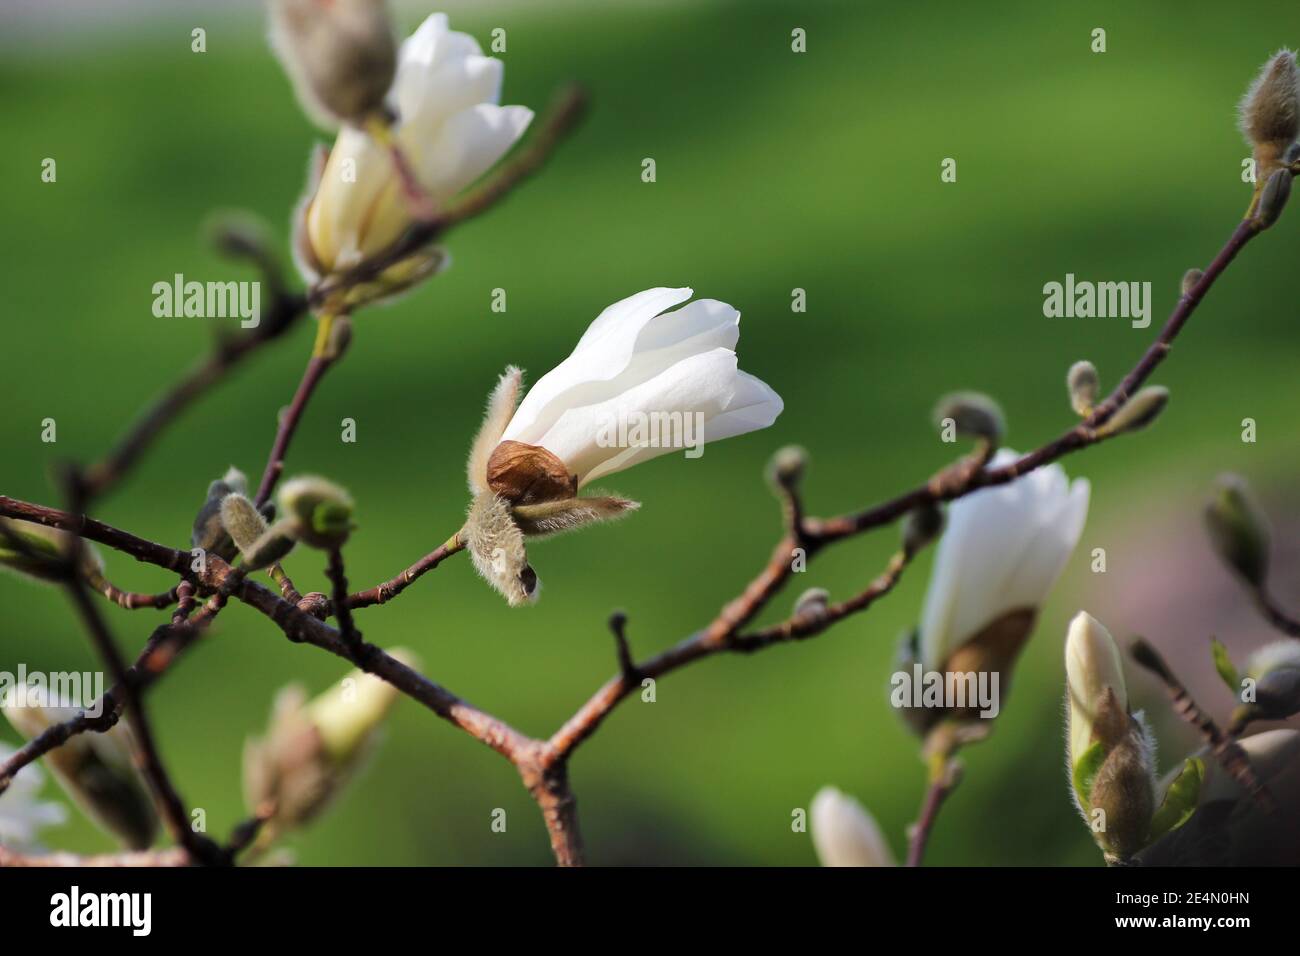 Magnolia tree blossoms Stock Photo